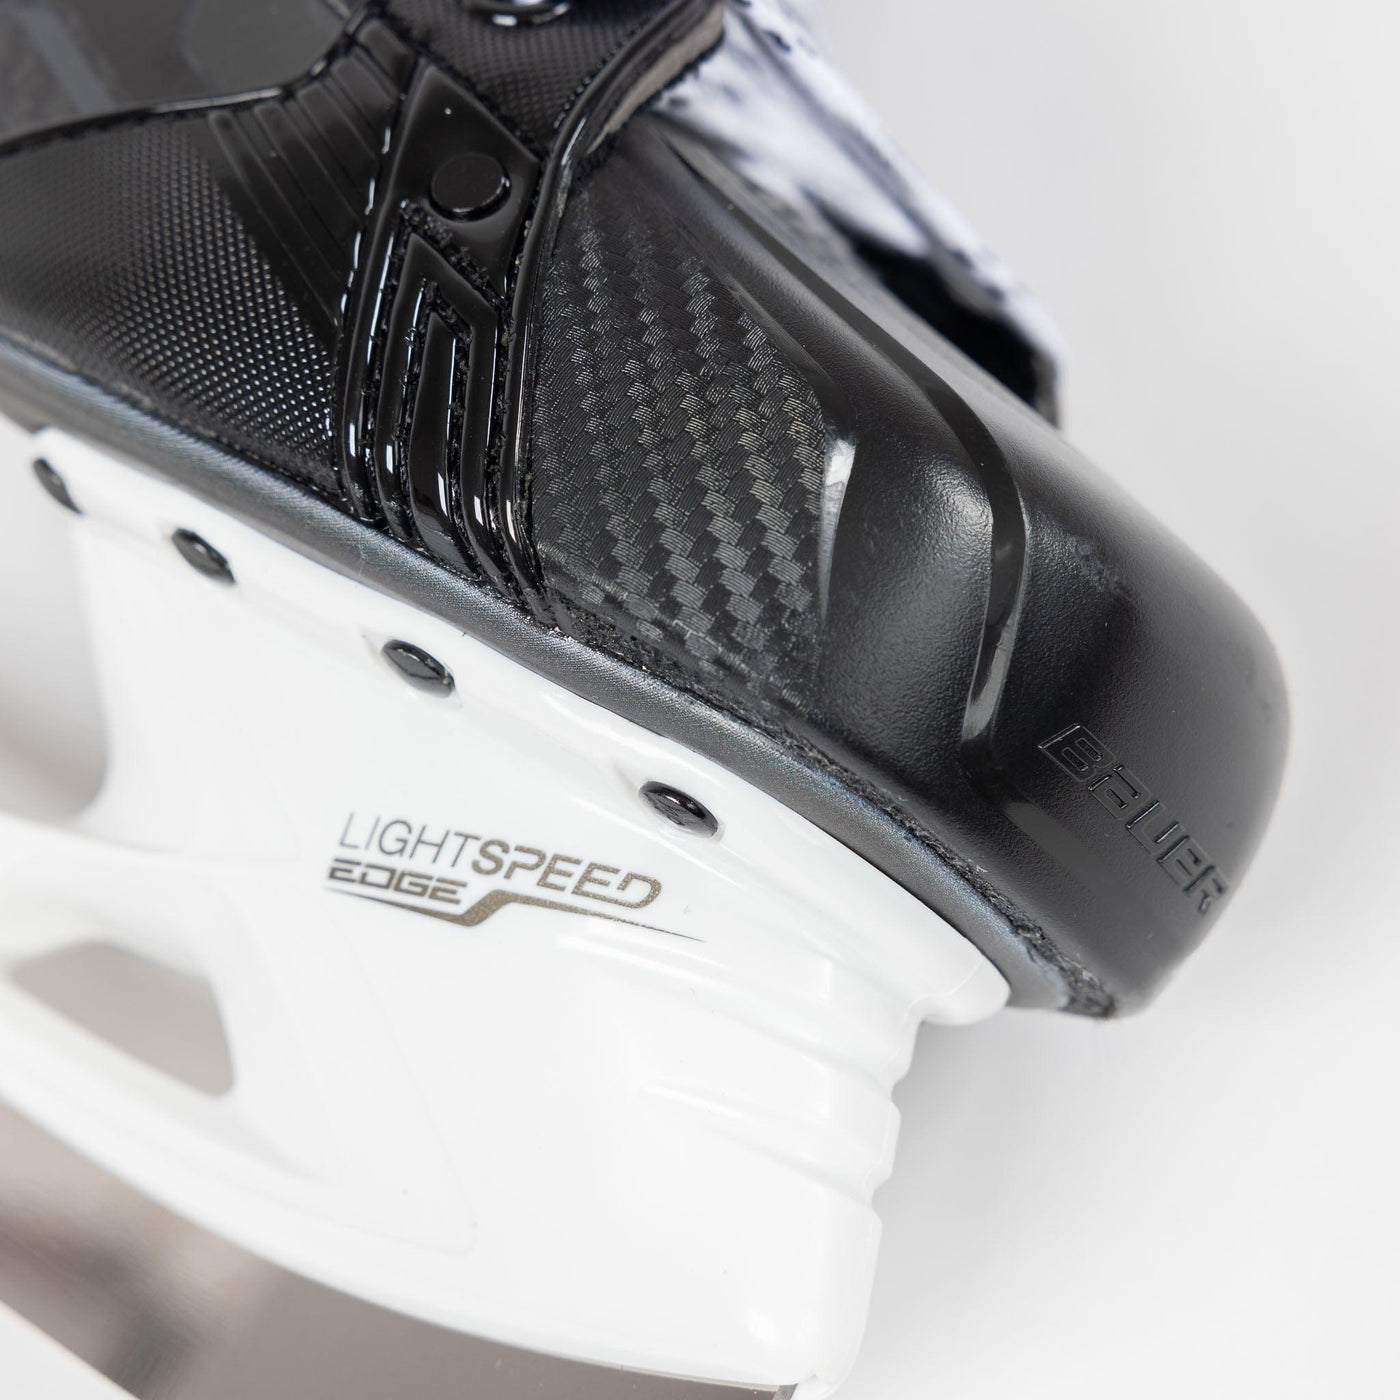 Bauer Supreme Matrix Senior Hockey Skates - The Hockey Shop Source For Sports